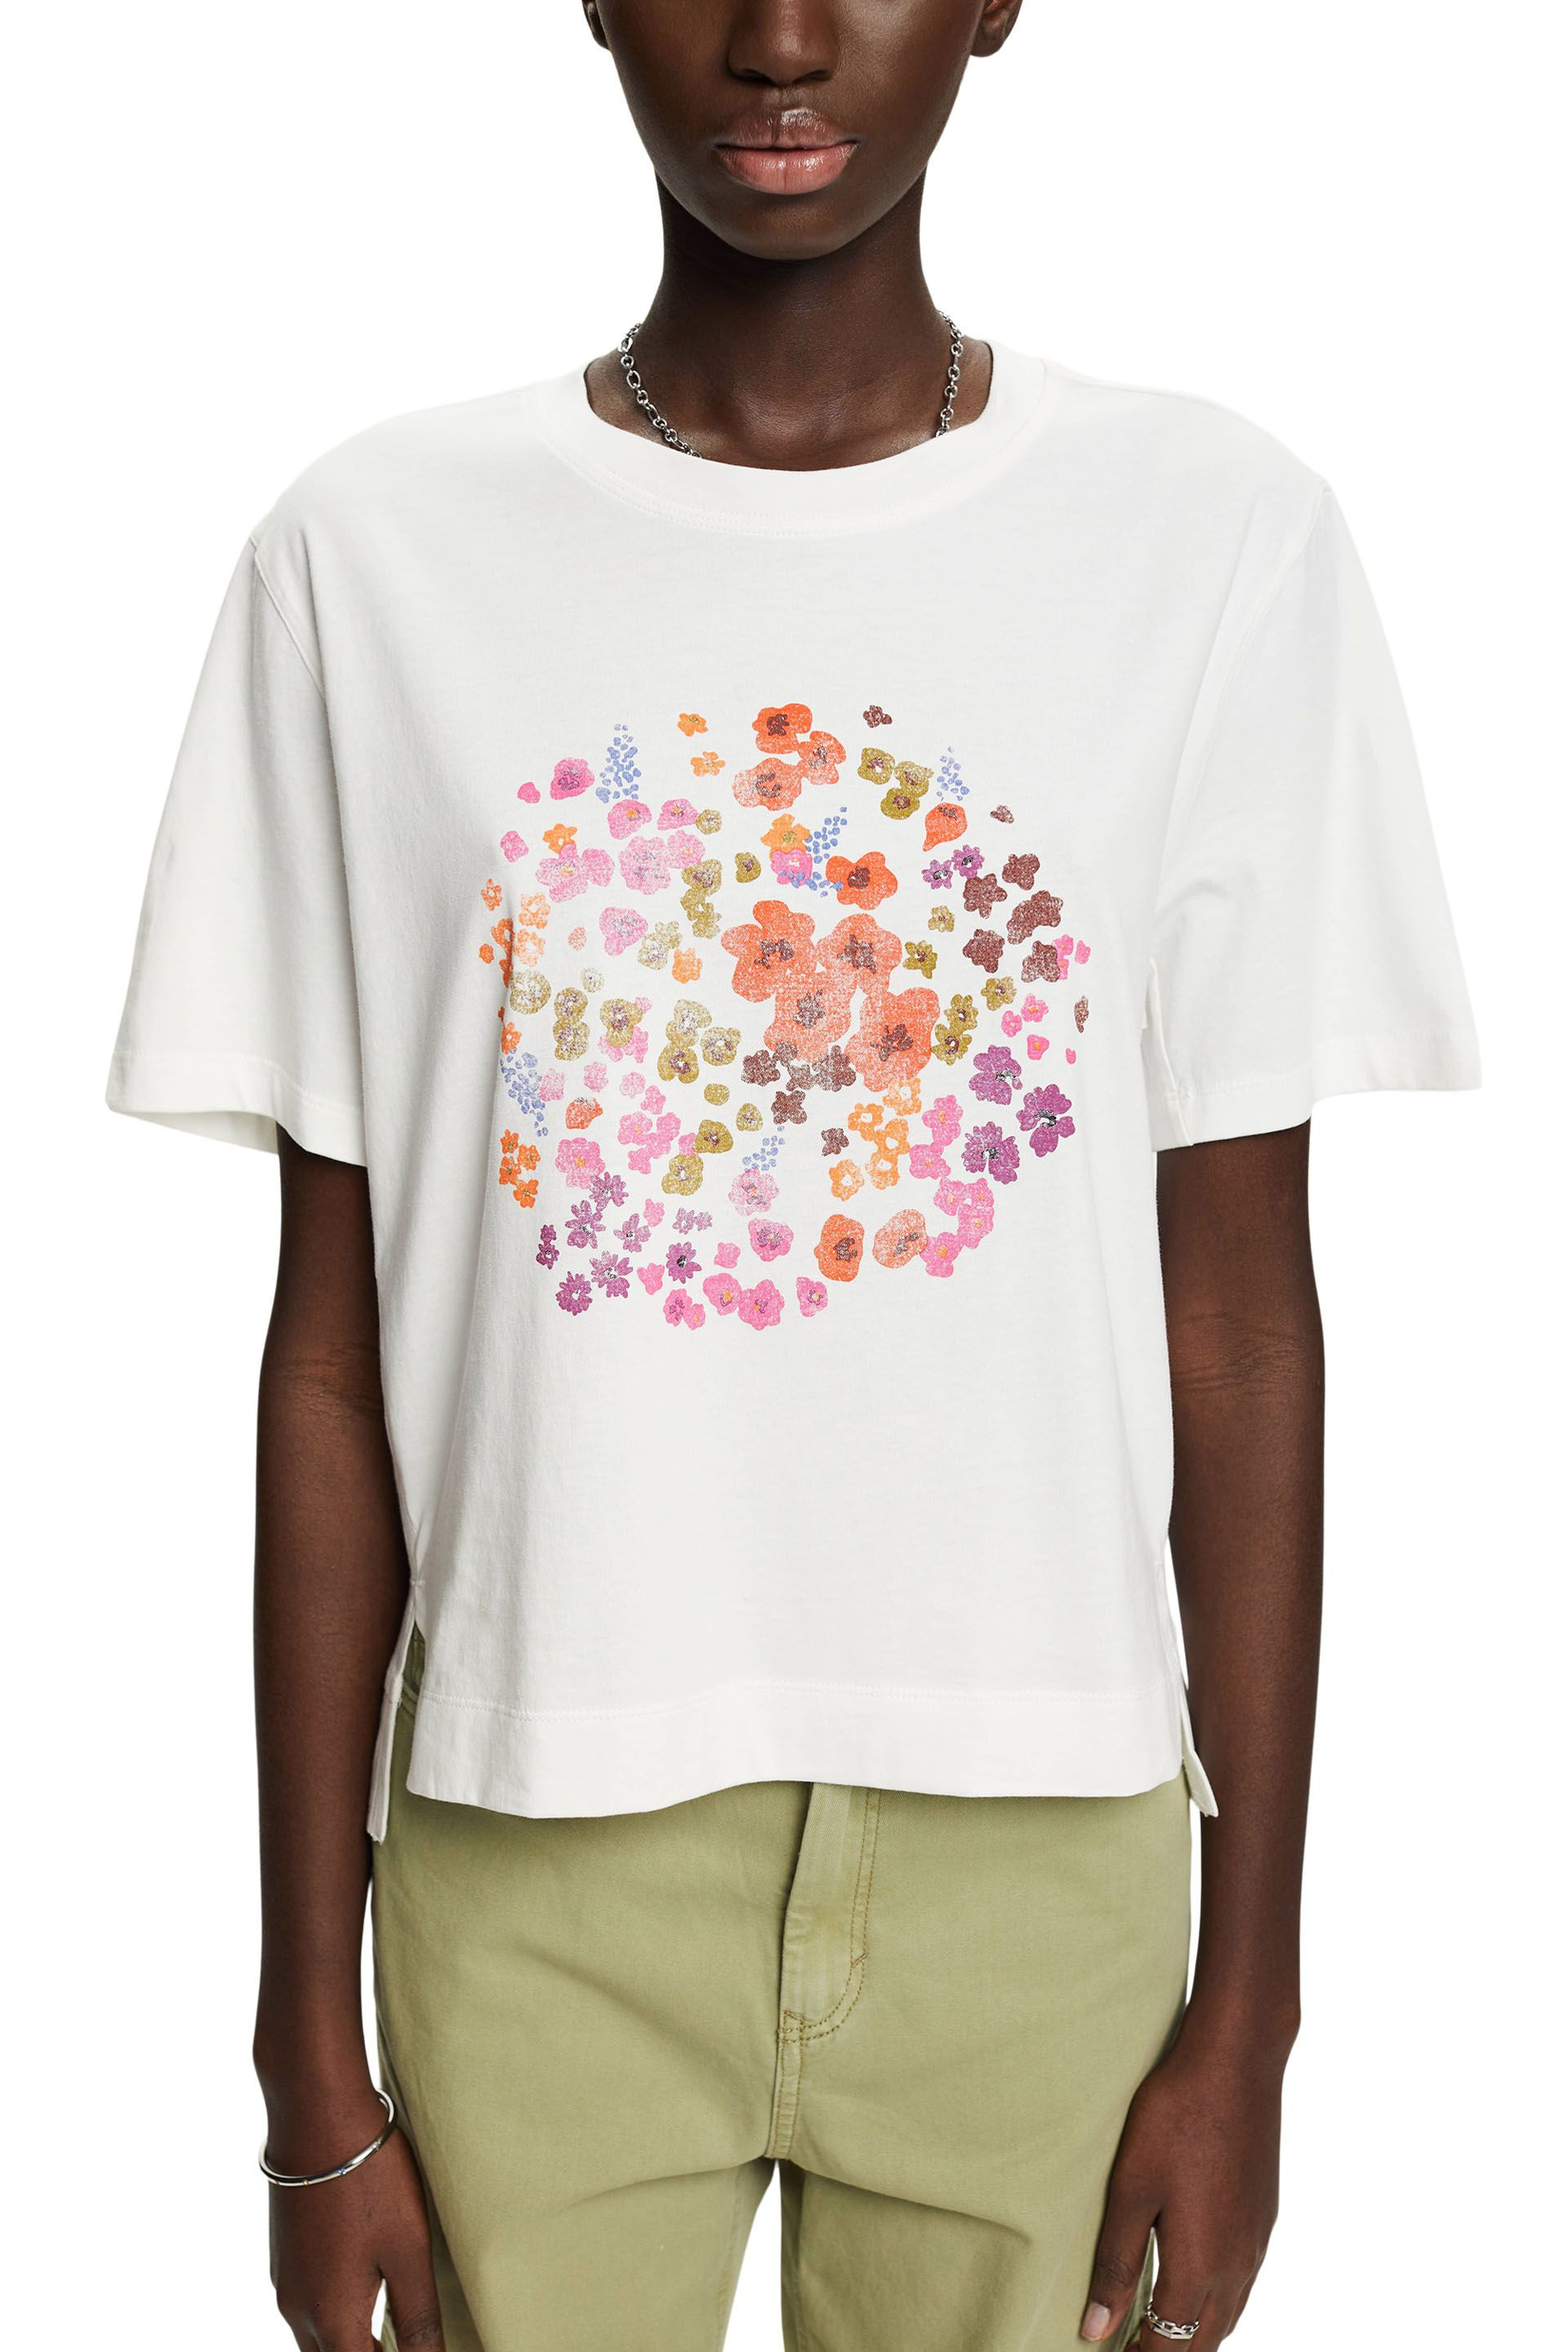 Esprit - T-shirt con stampa floreale, Bianco, large image number 2